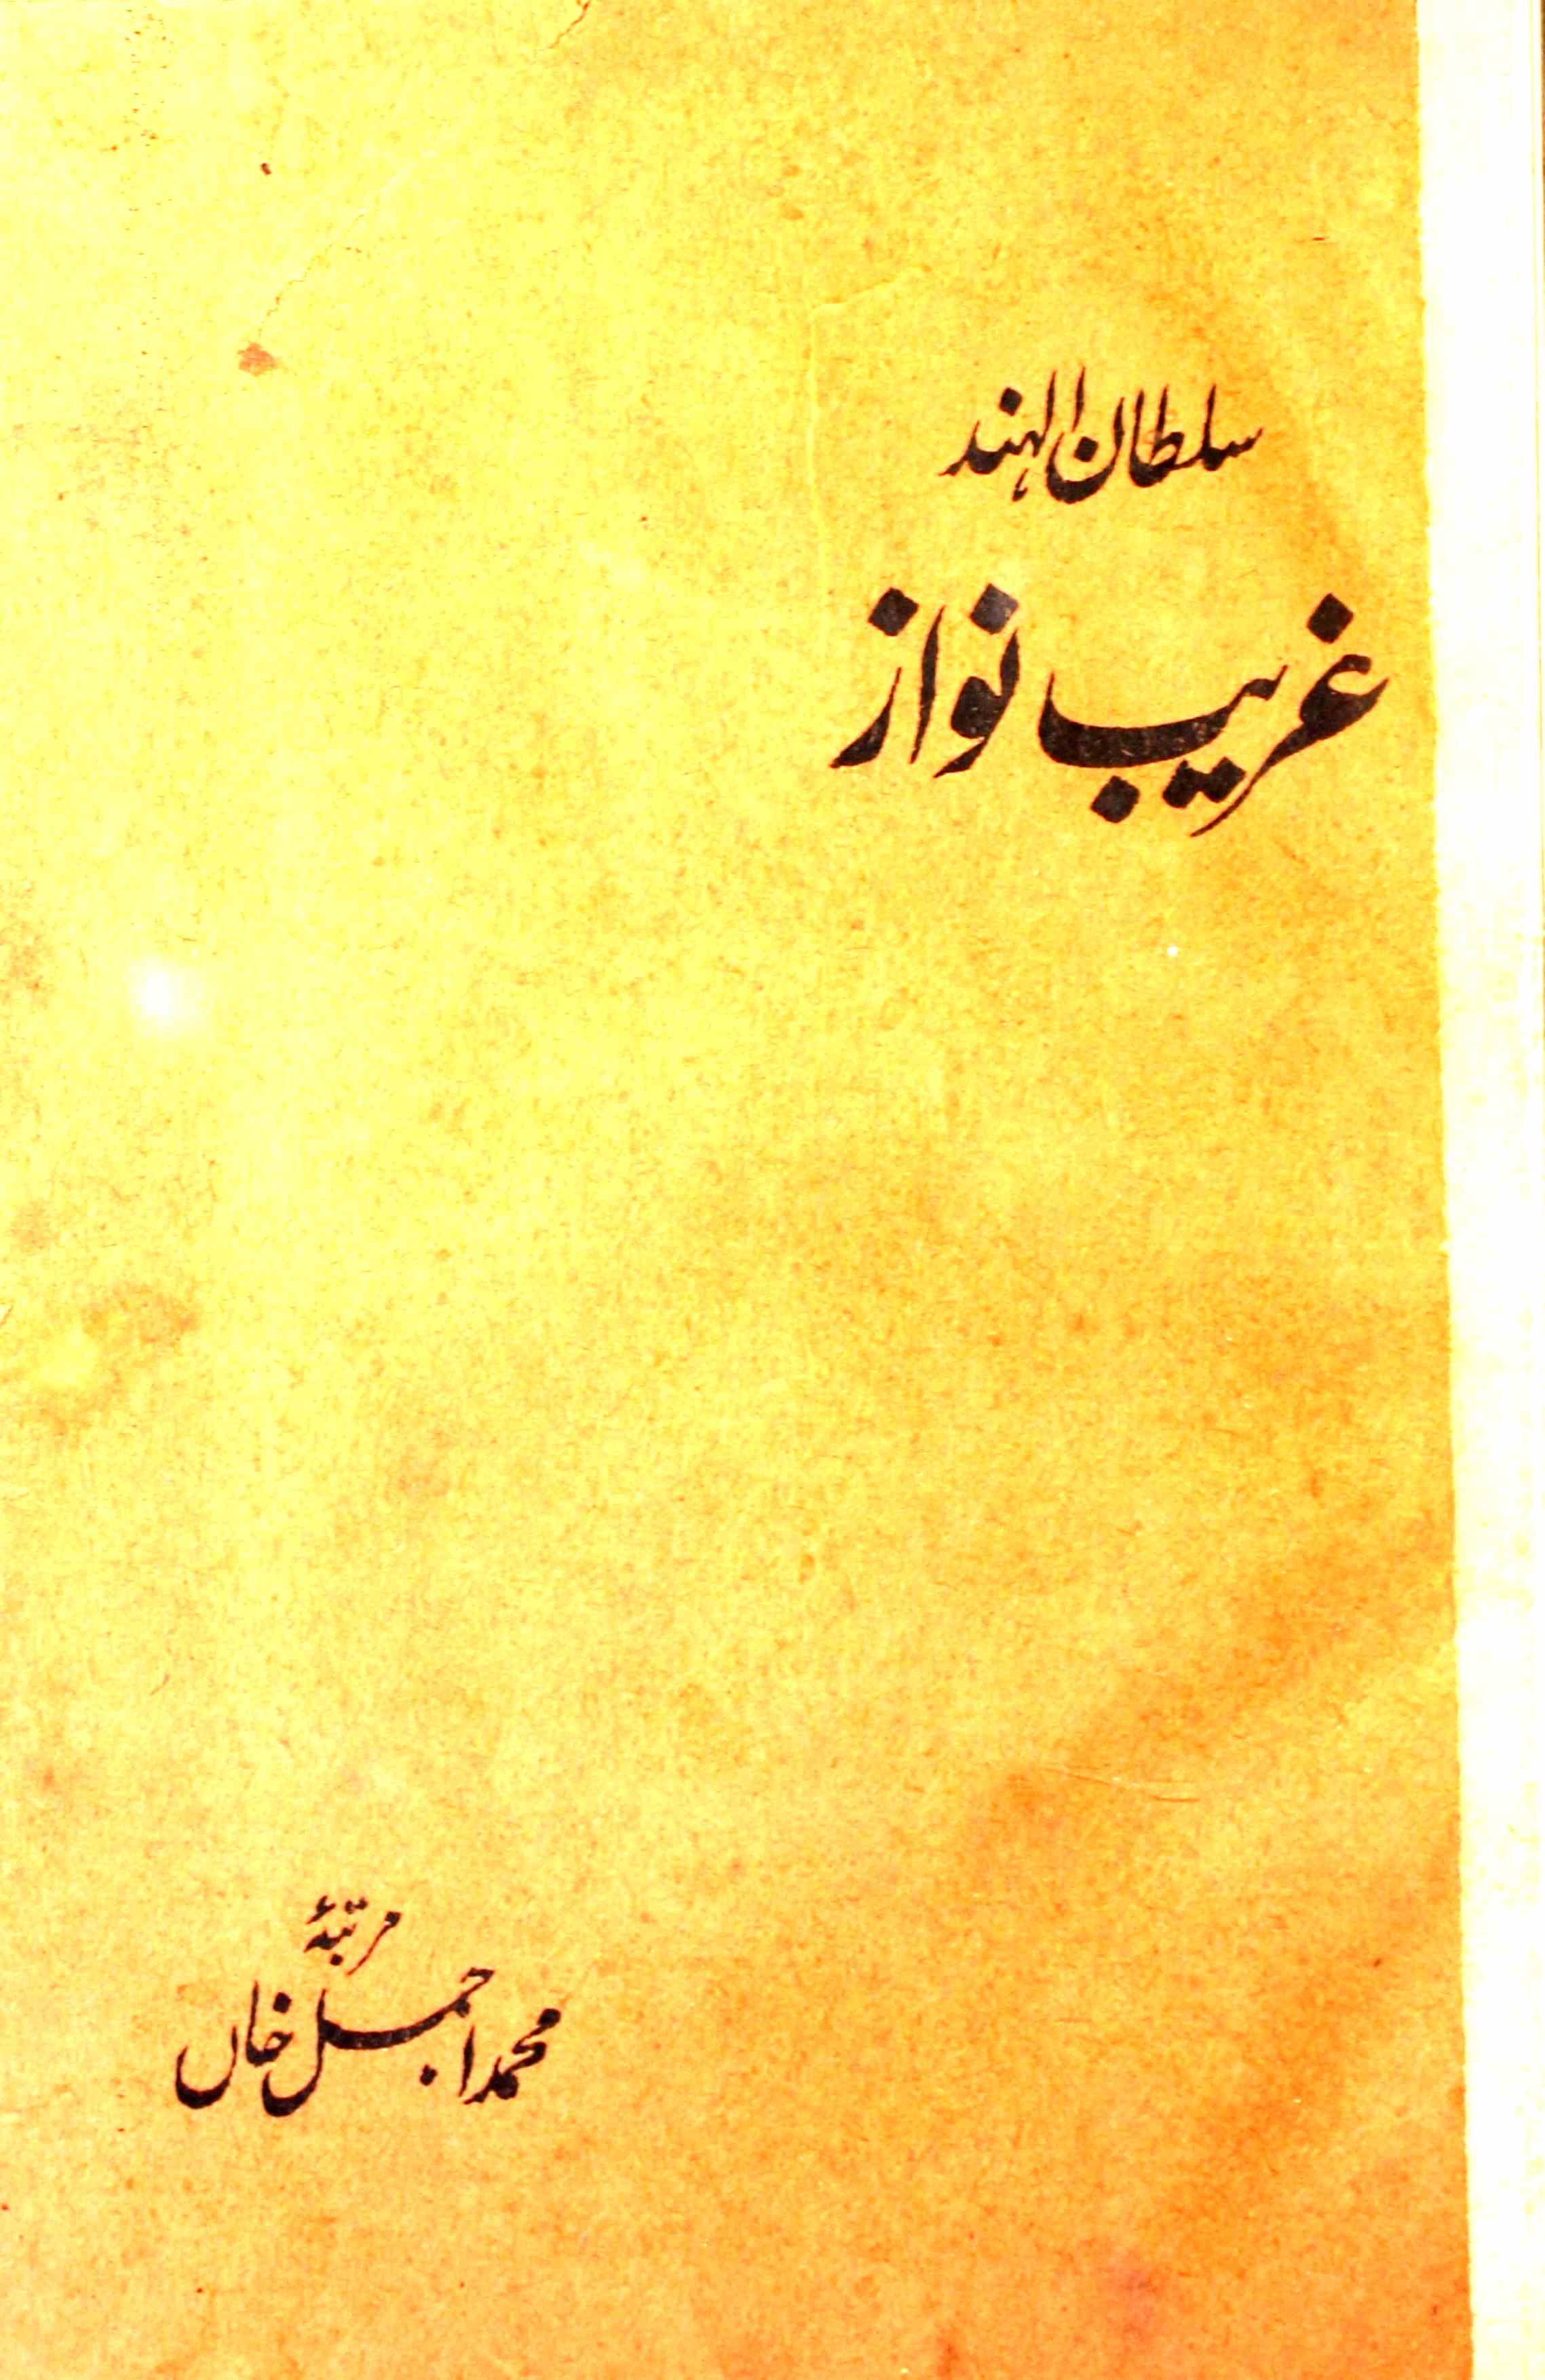 sultan-ul-hind gharib nawaz